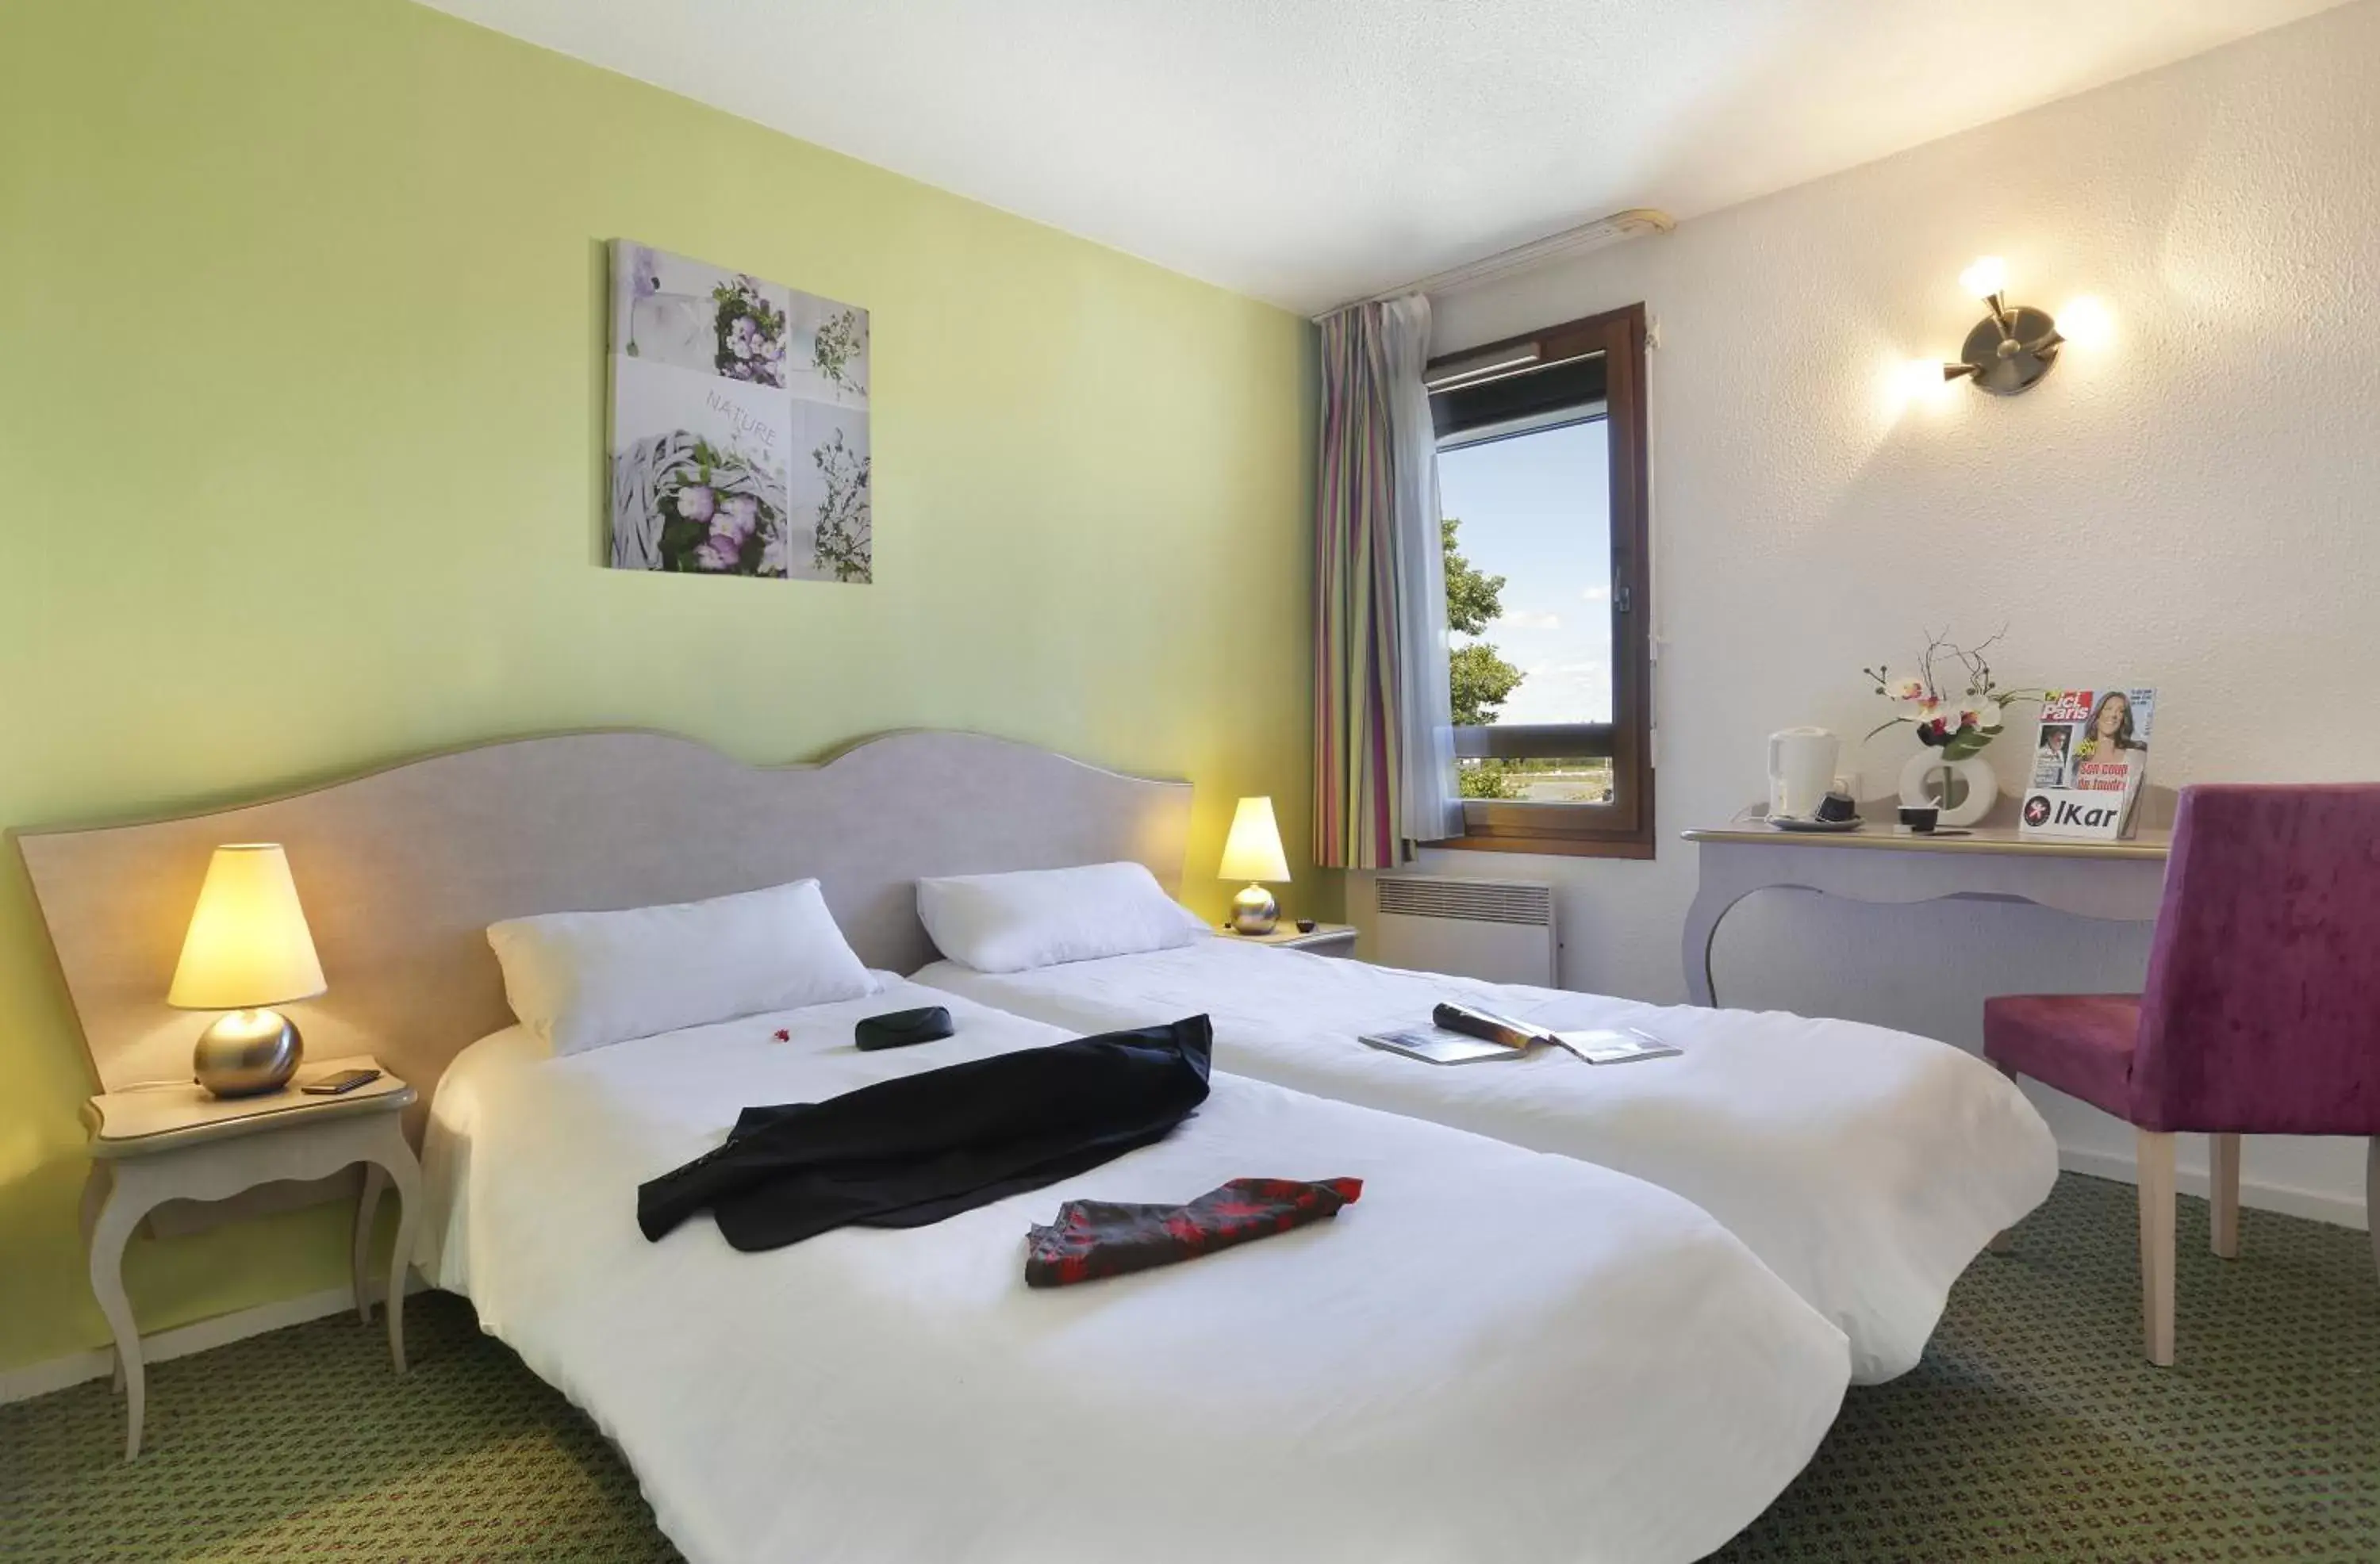 Bedroom, Bed in Hôtel Ikar, Blois Sud